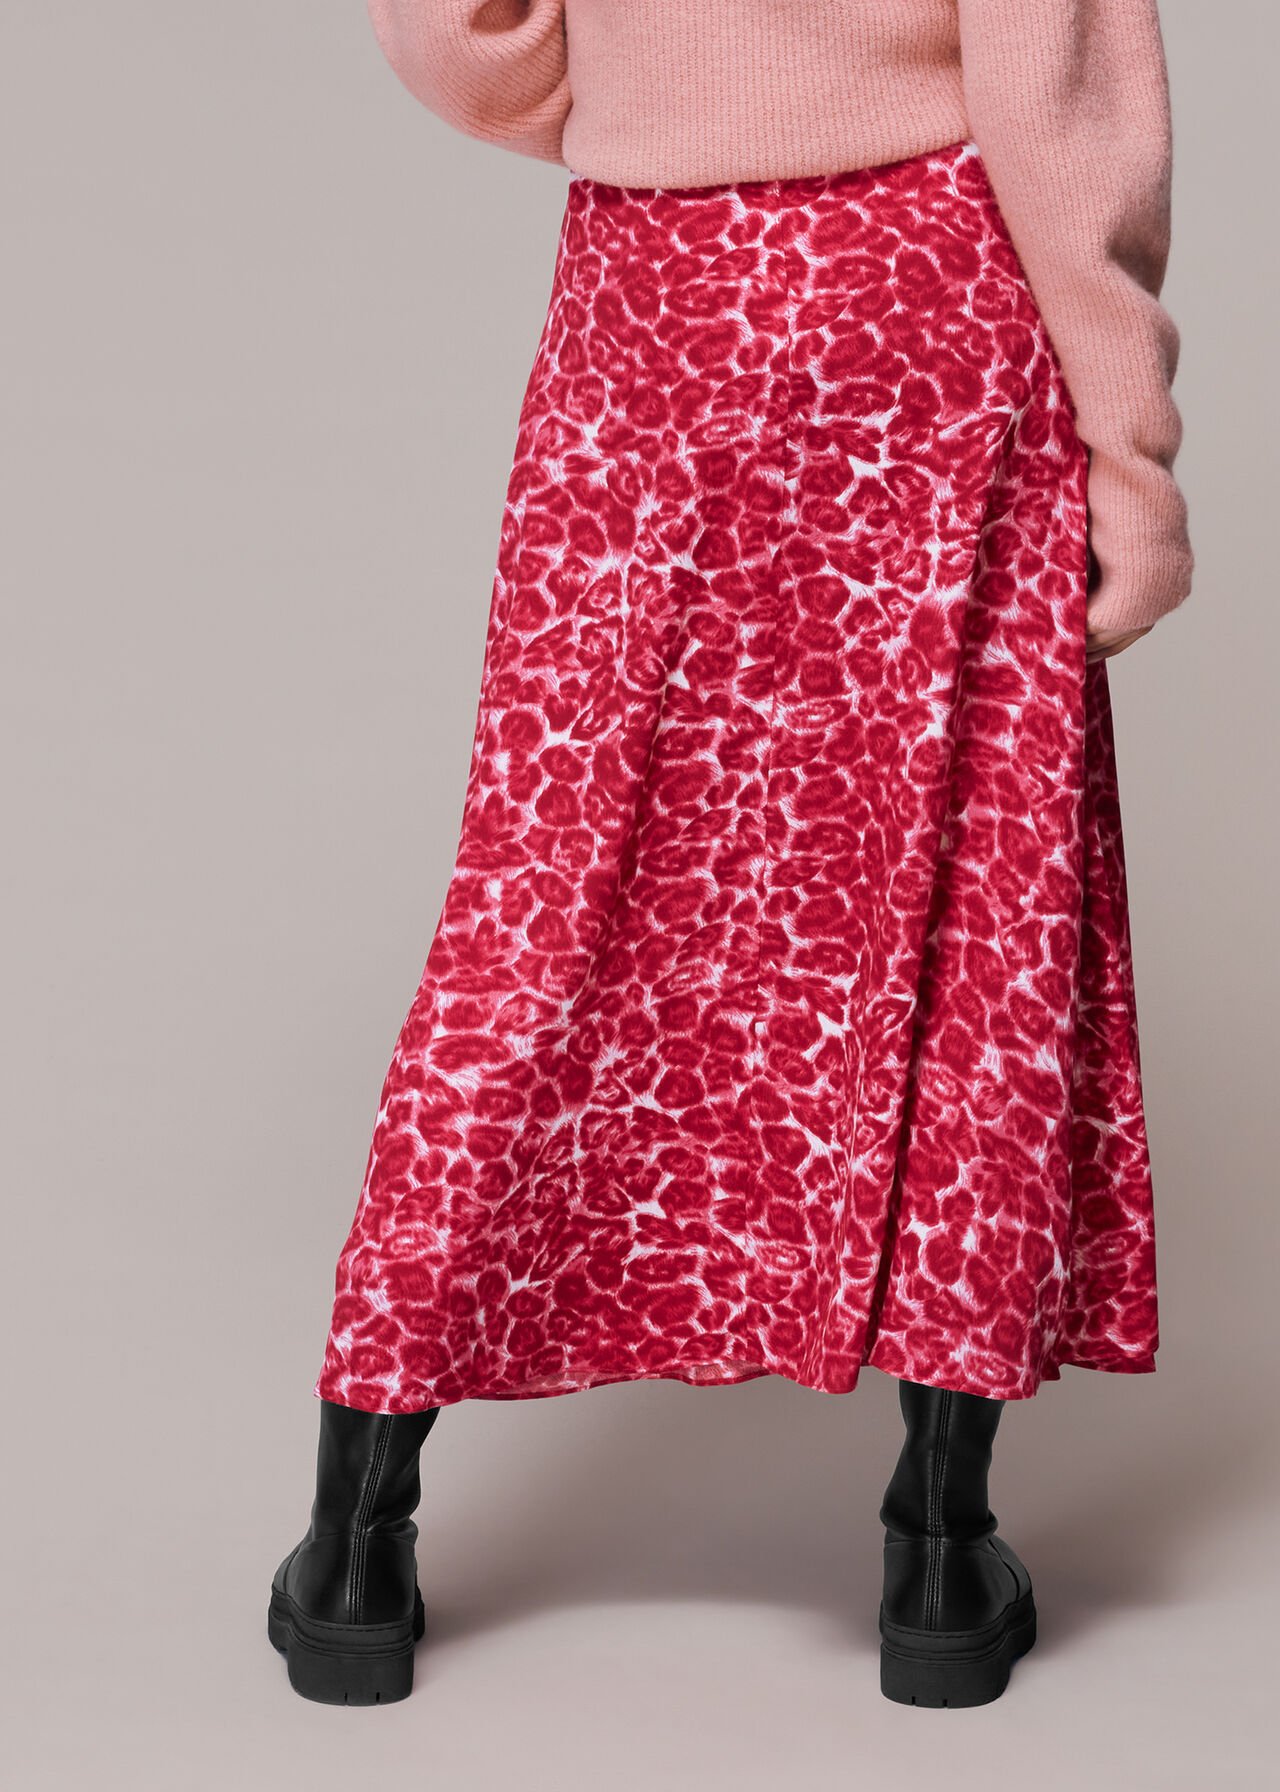 Clouded Leopard Skirt